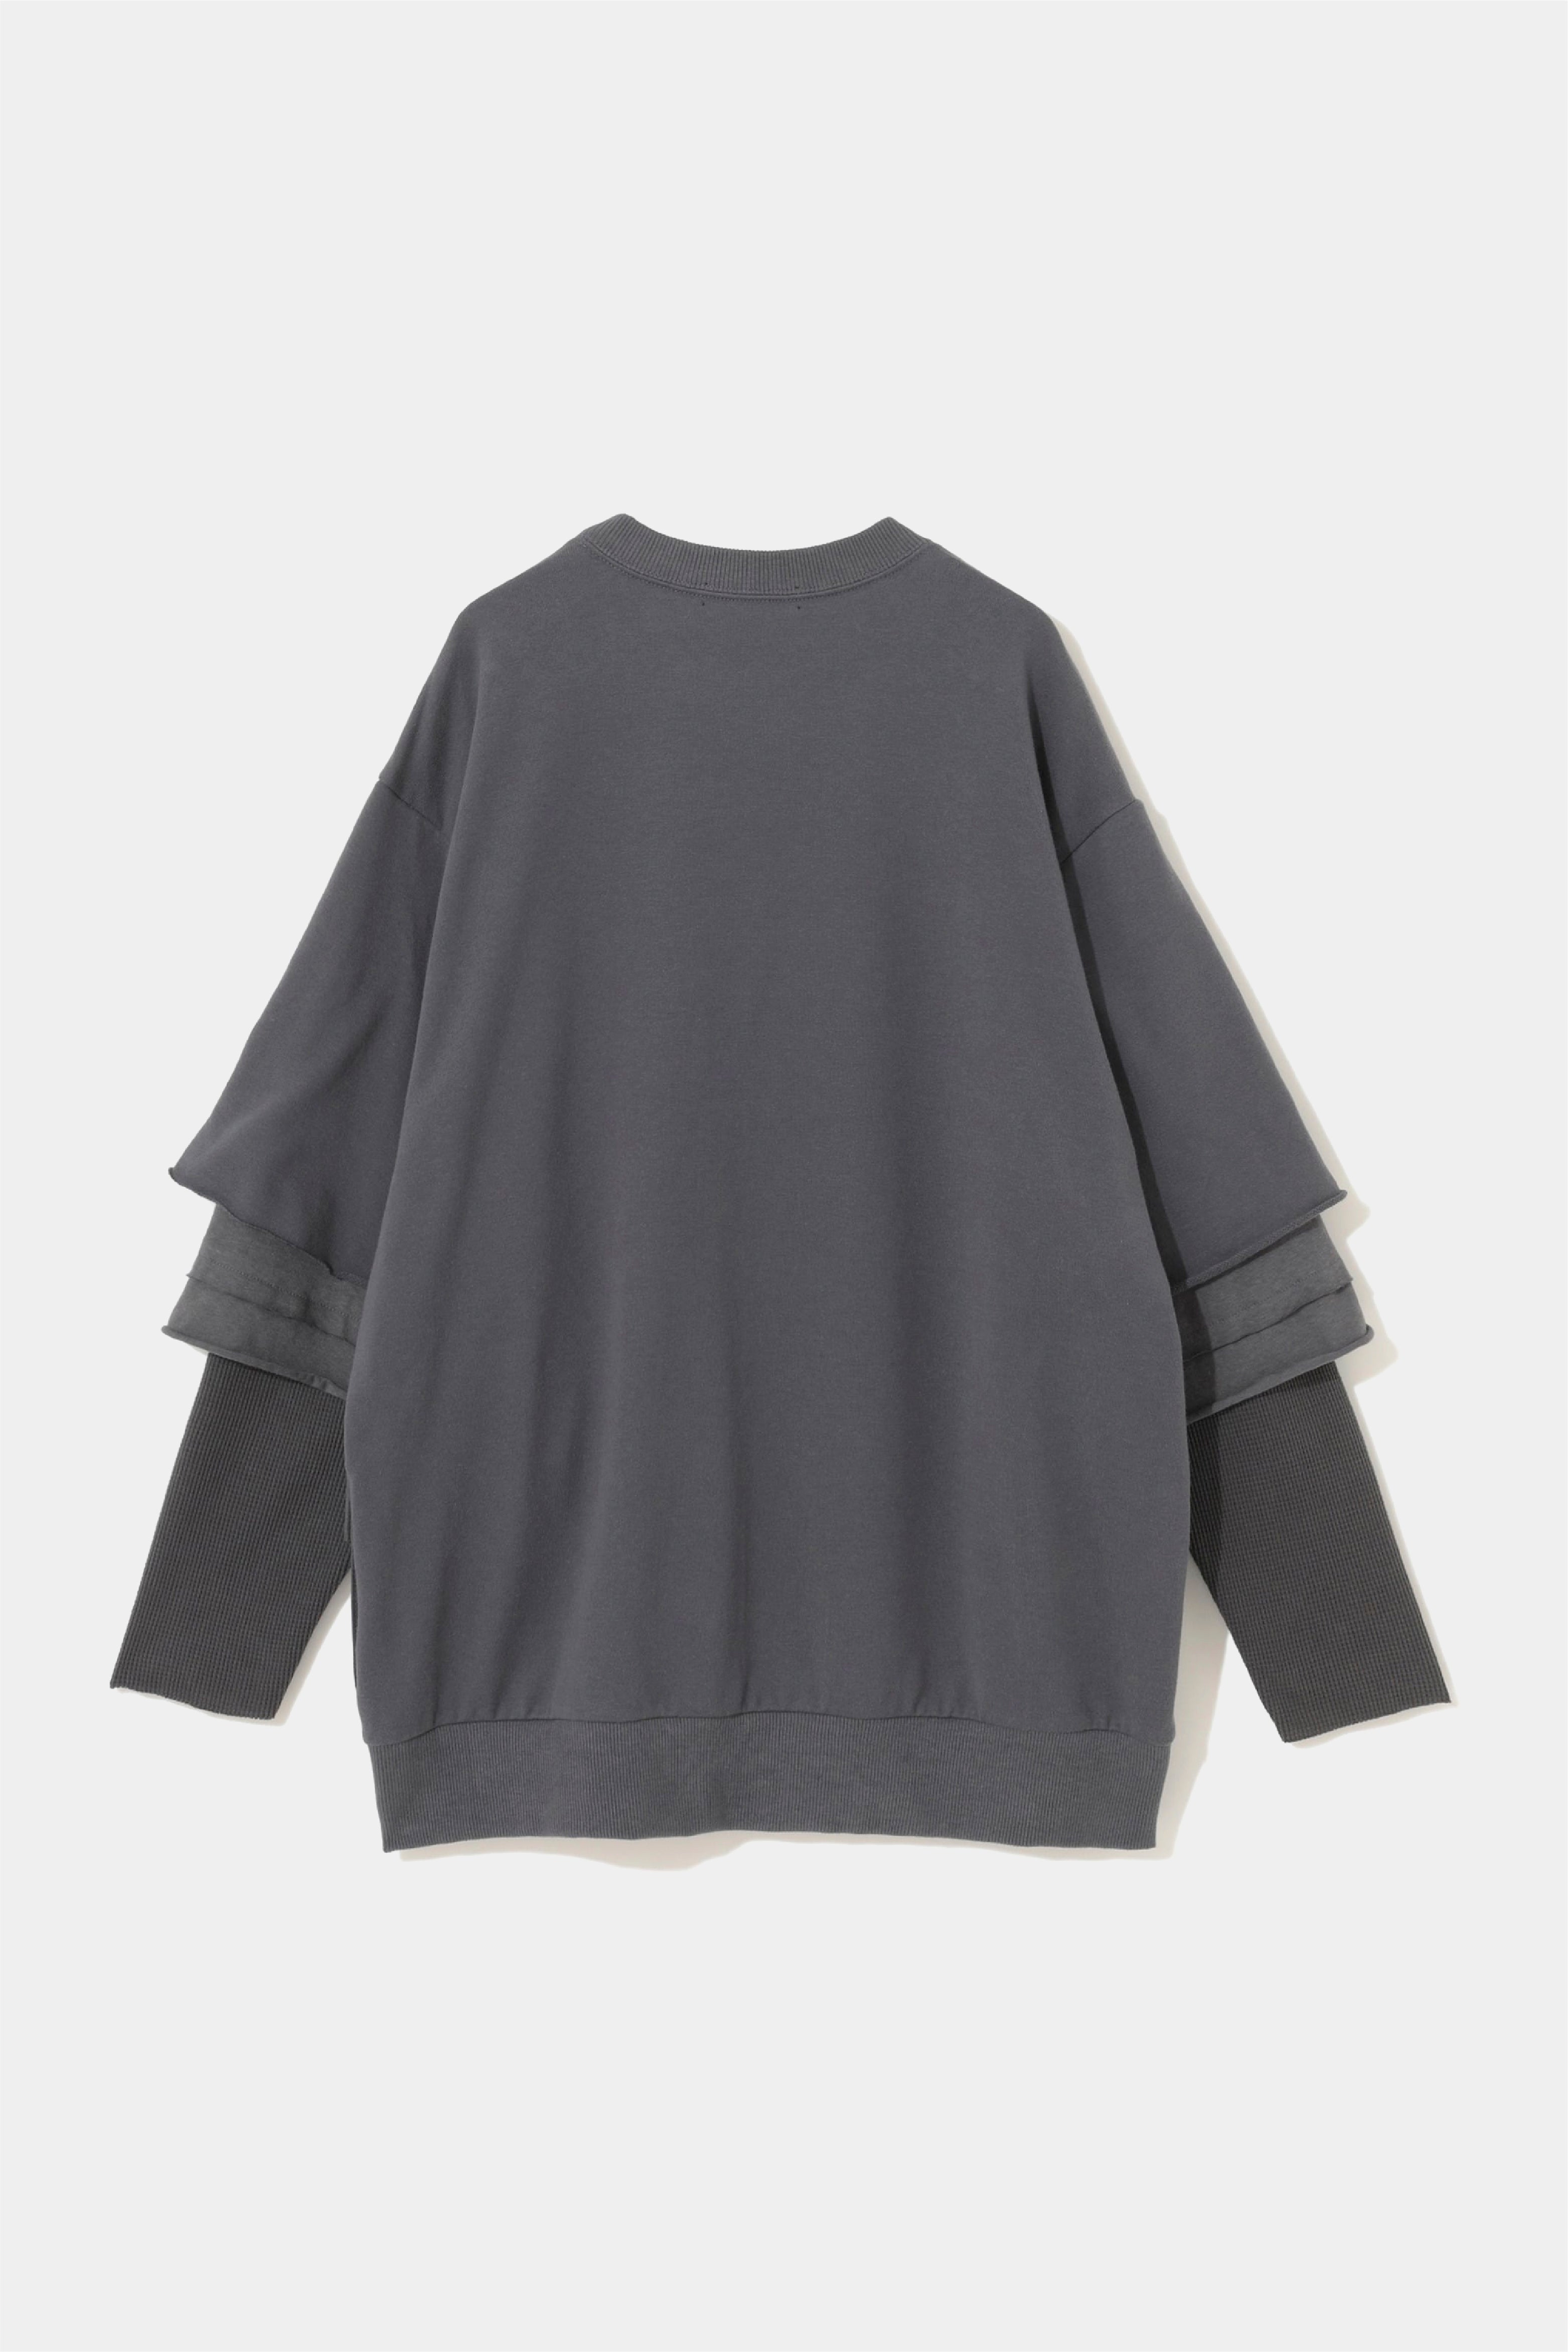 Selectshop FRAME - UNDERCOVER Layered-Sleeve Cotton Sweatshirt Sweats-knits Concept Store Dubai